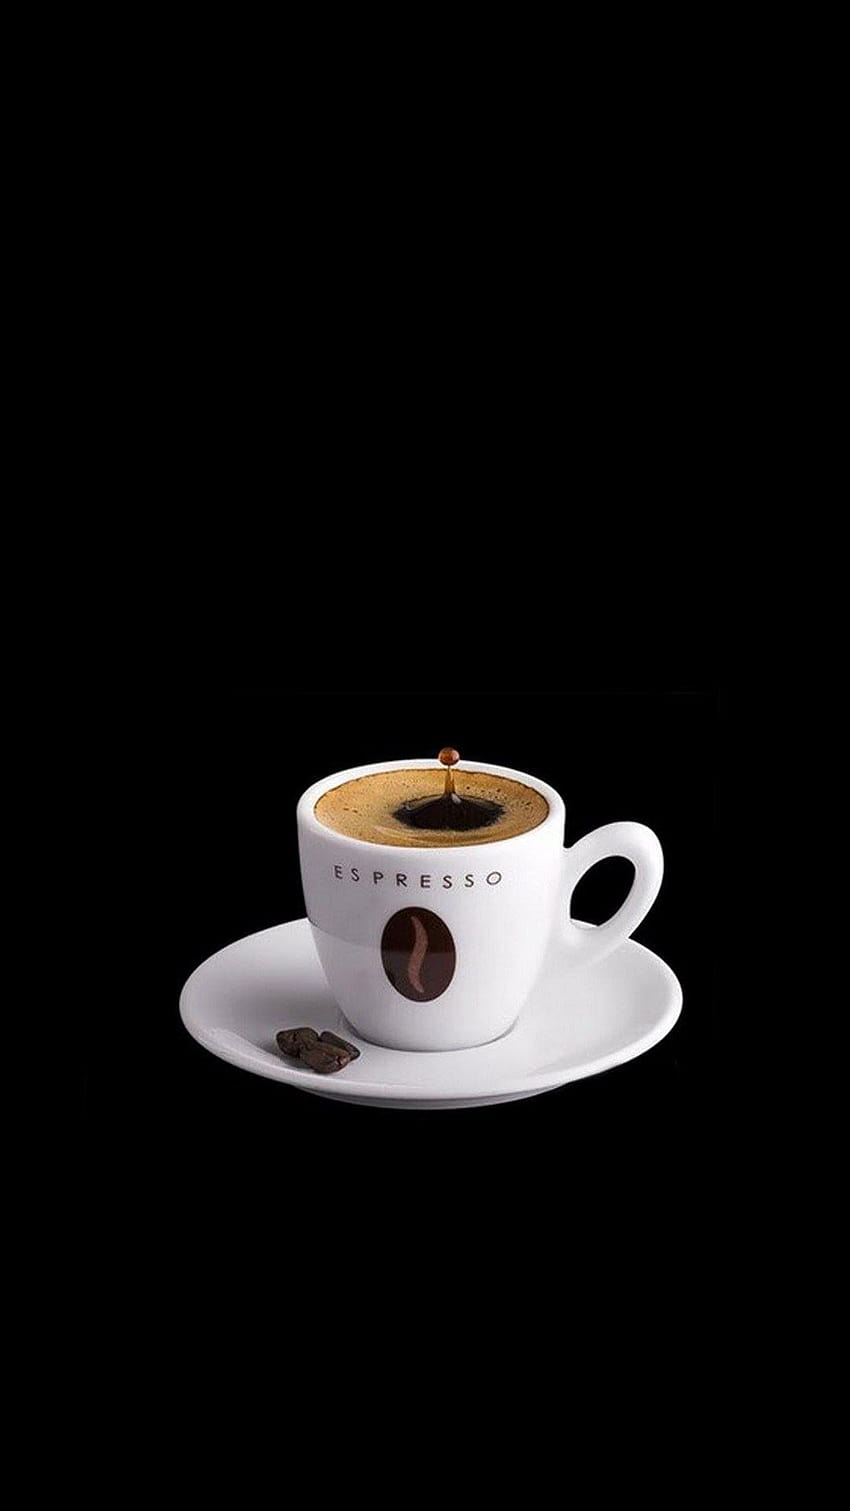 Espresso-Kaffeetasse iPhone 8 HD-Handy-Hintergrundbild